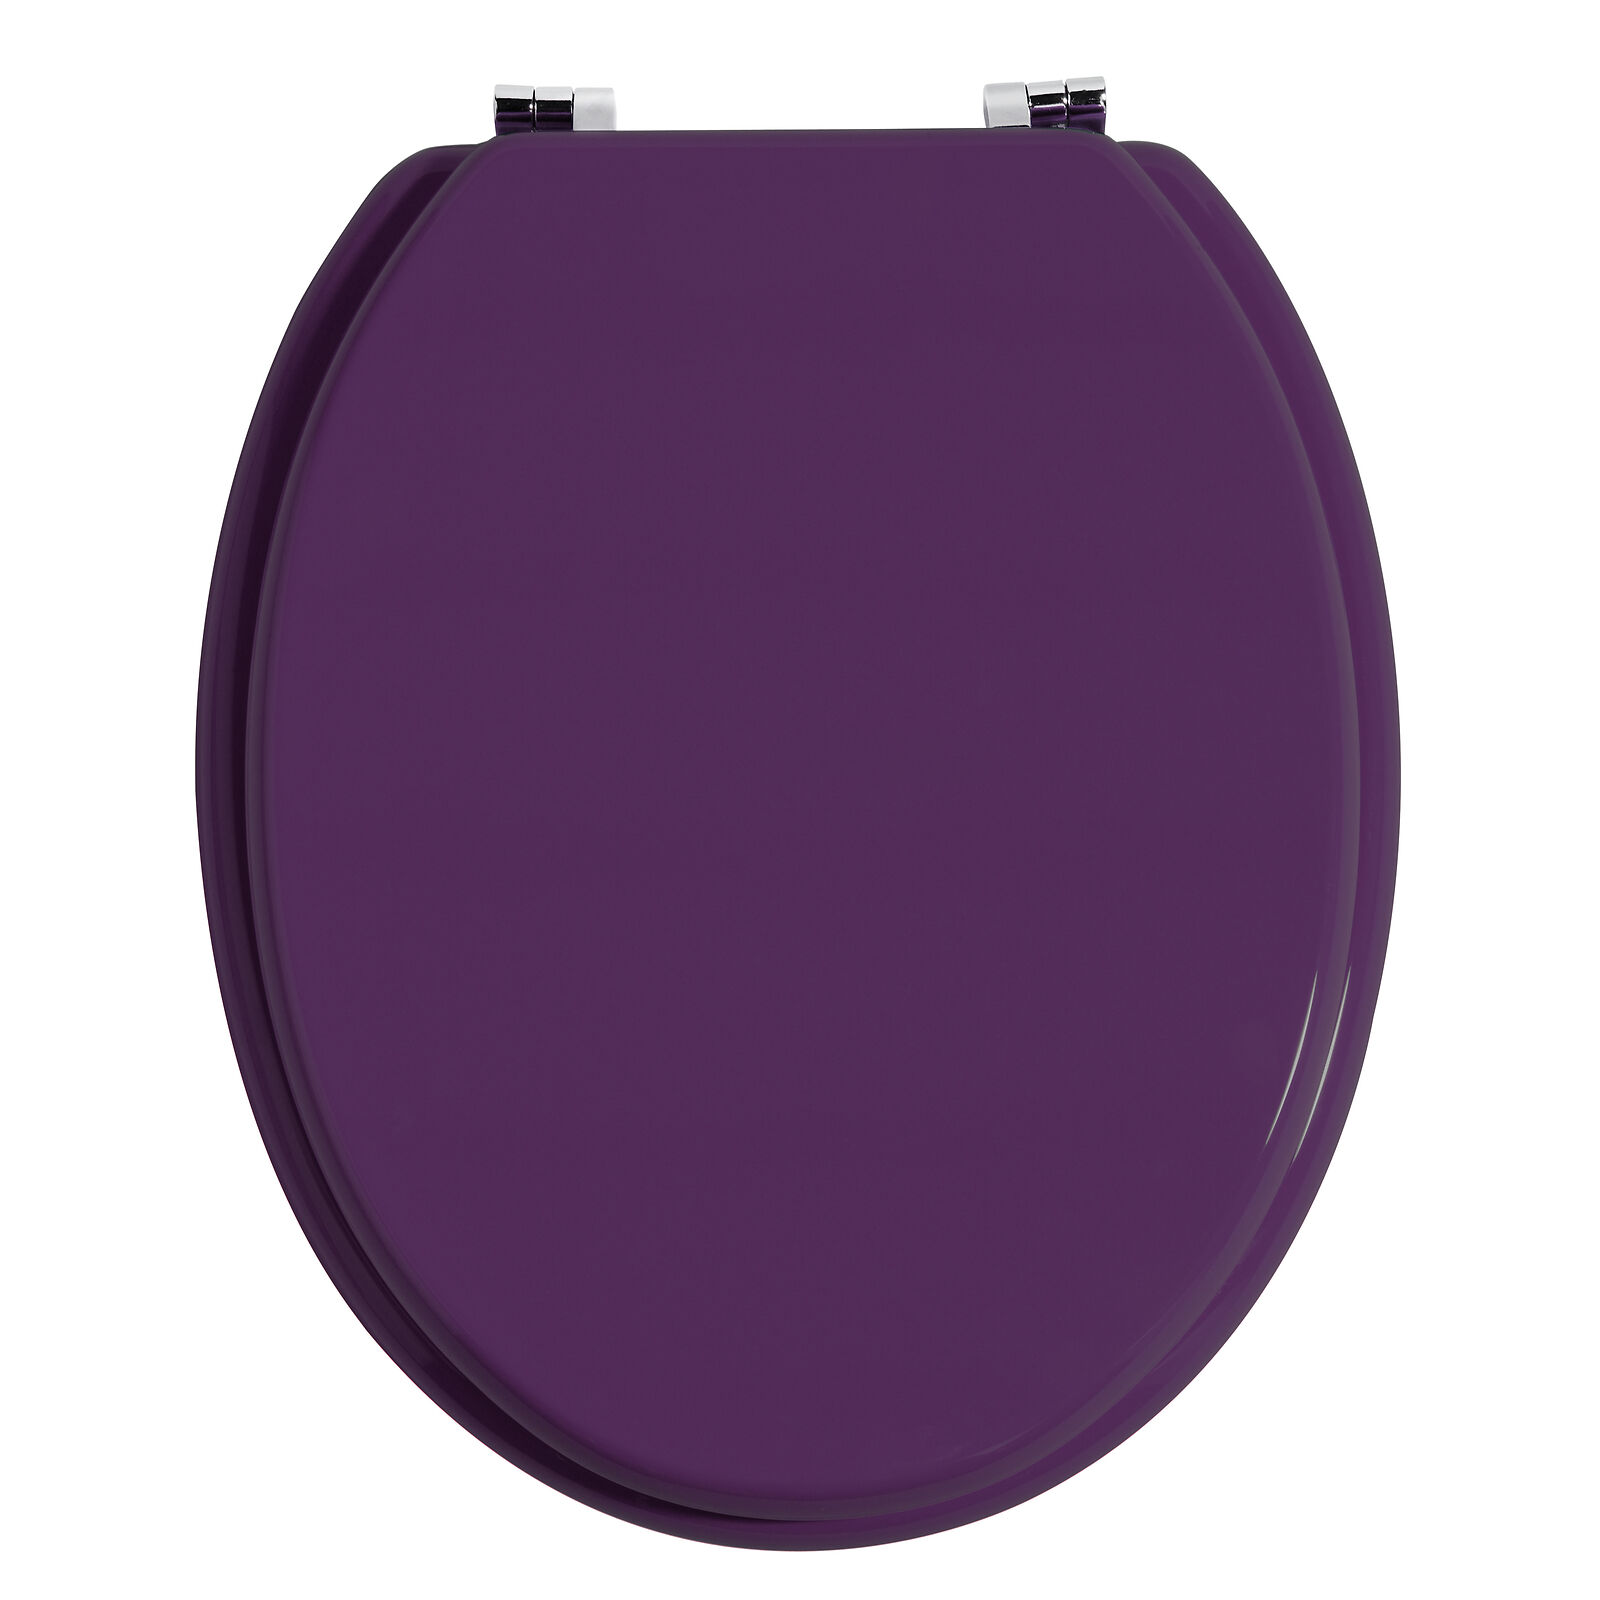 Premier Housewares Toilet Seat Purple 5018705725970 | eBay